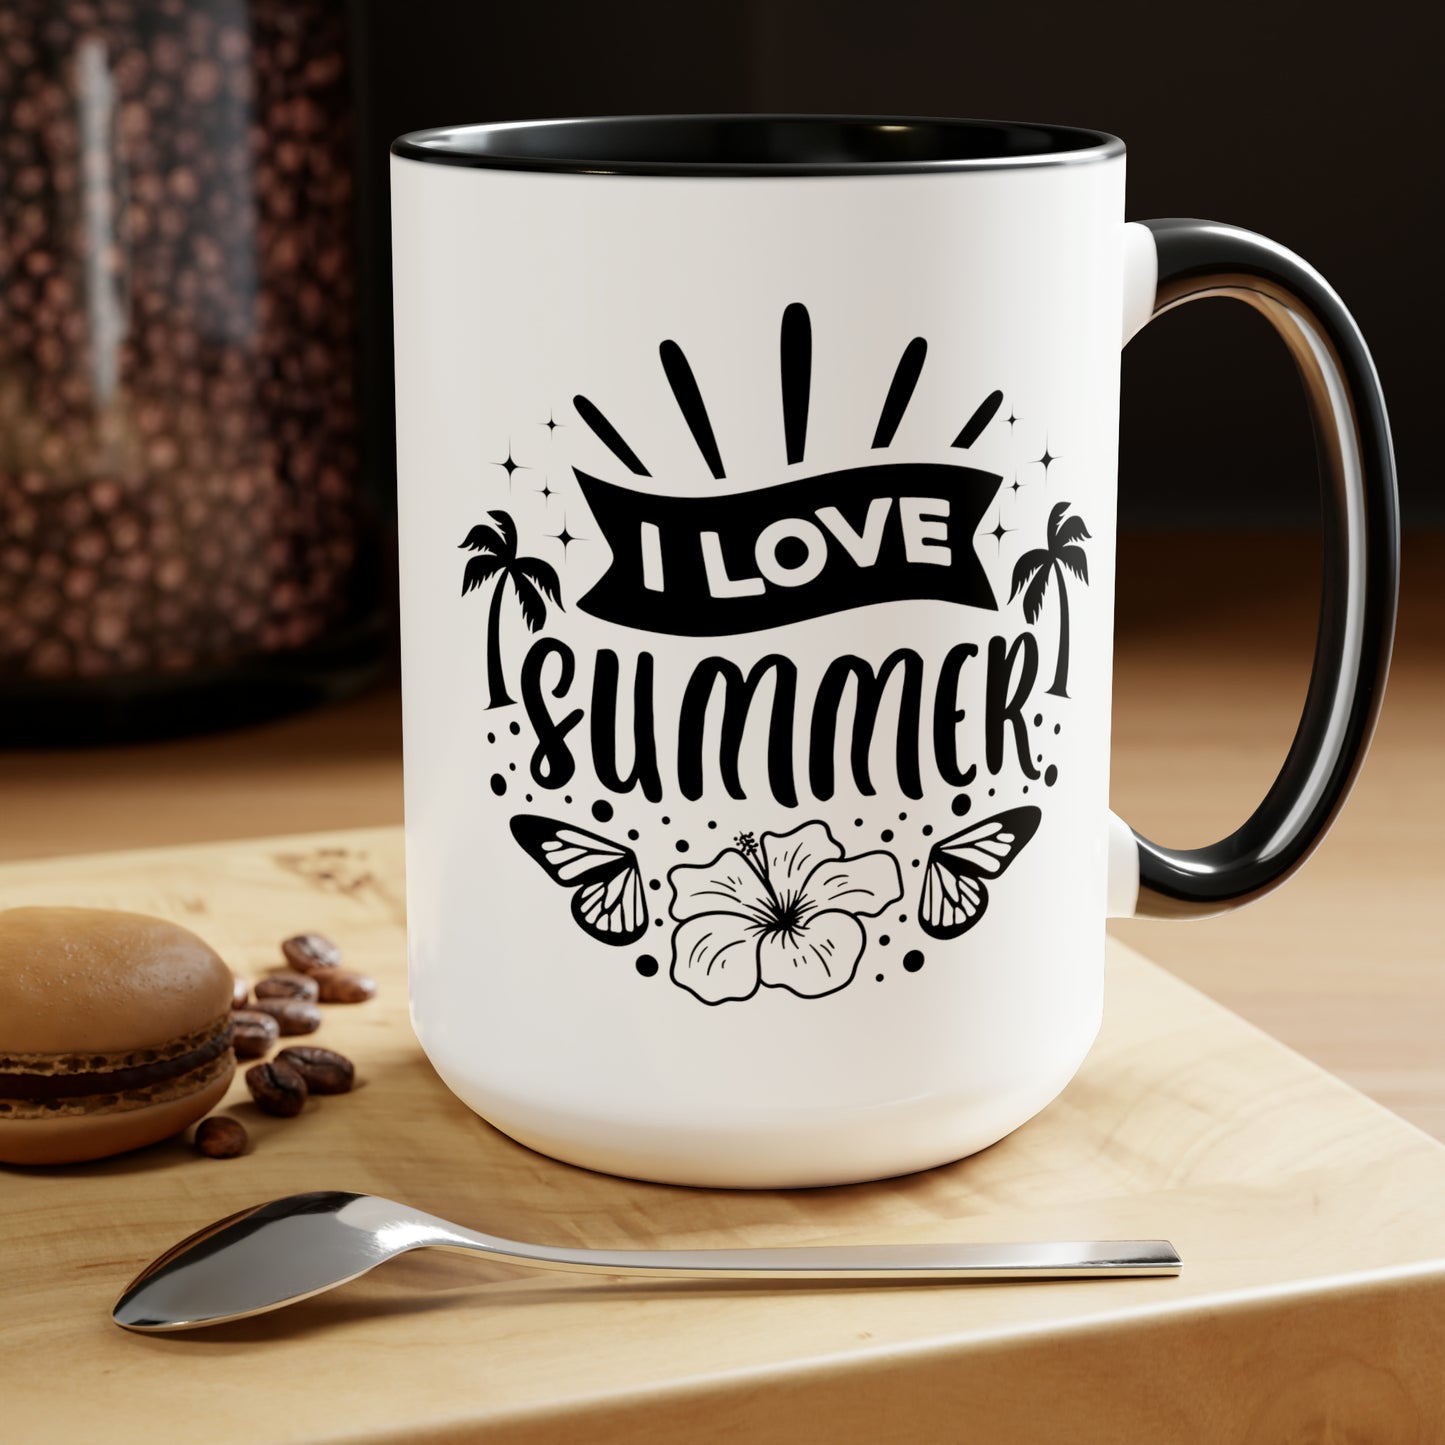 I Love Summer Two-Tone Coffee Mugs, 15oz